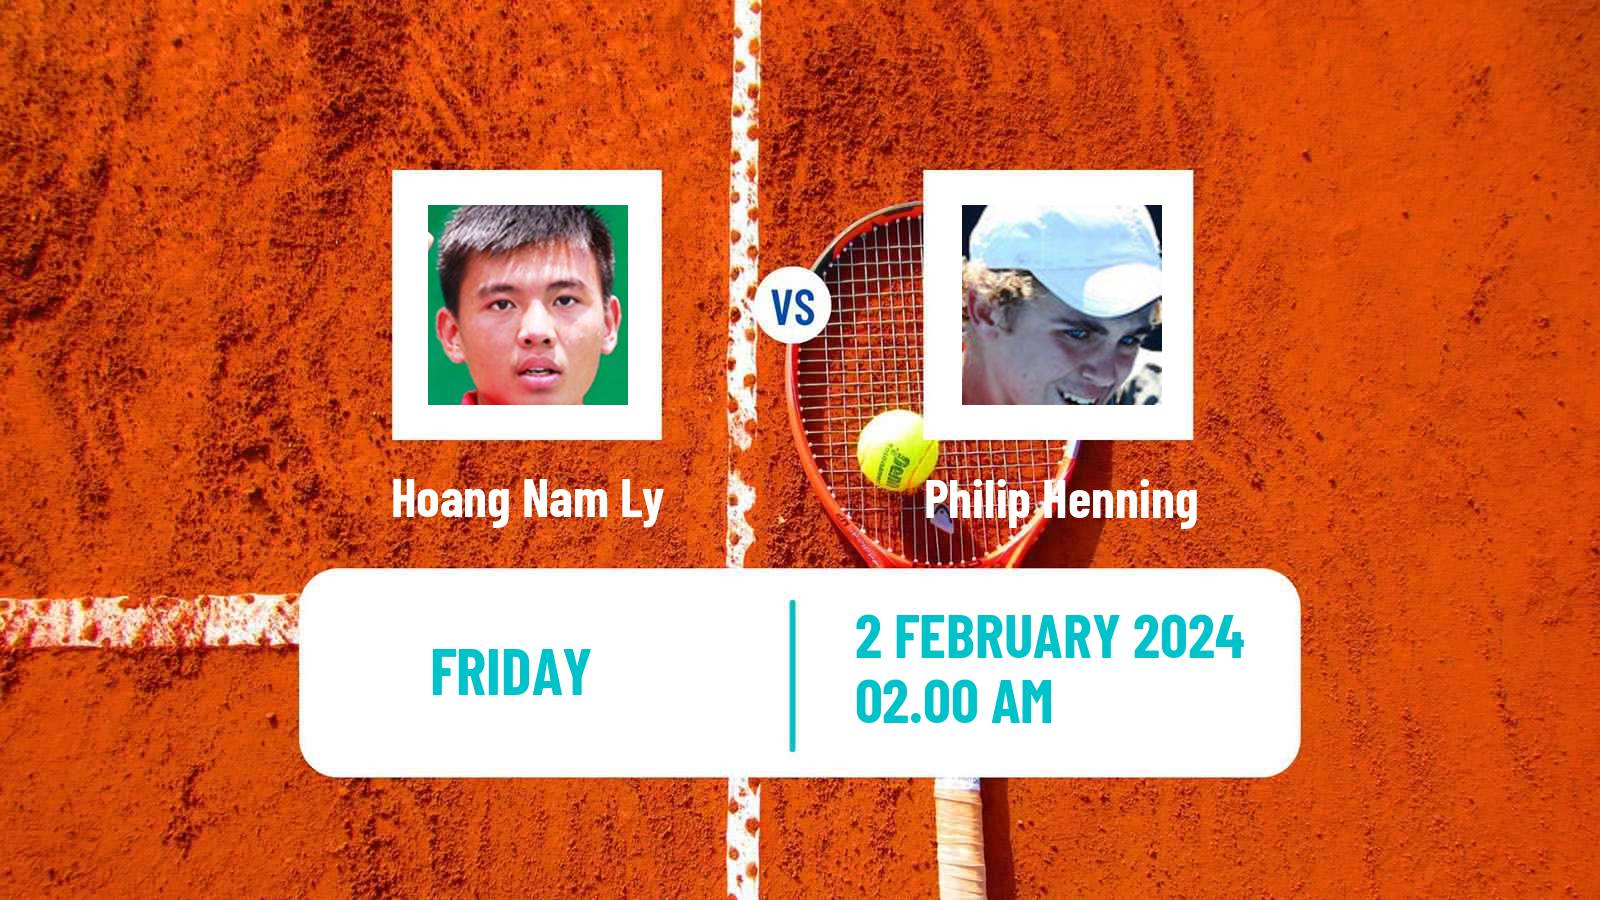 Tennis Davis Cup World Group II Hoang Nam Ly - Philip Henning